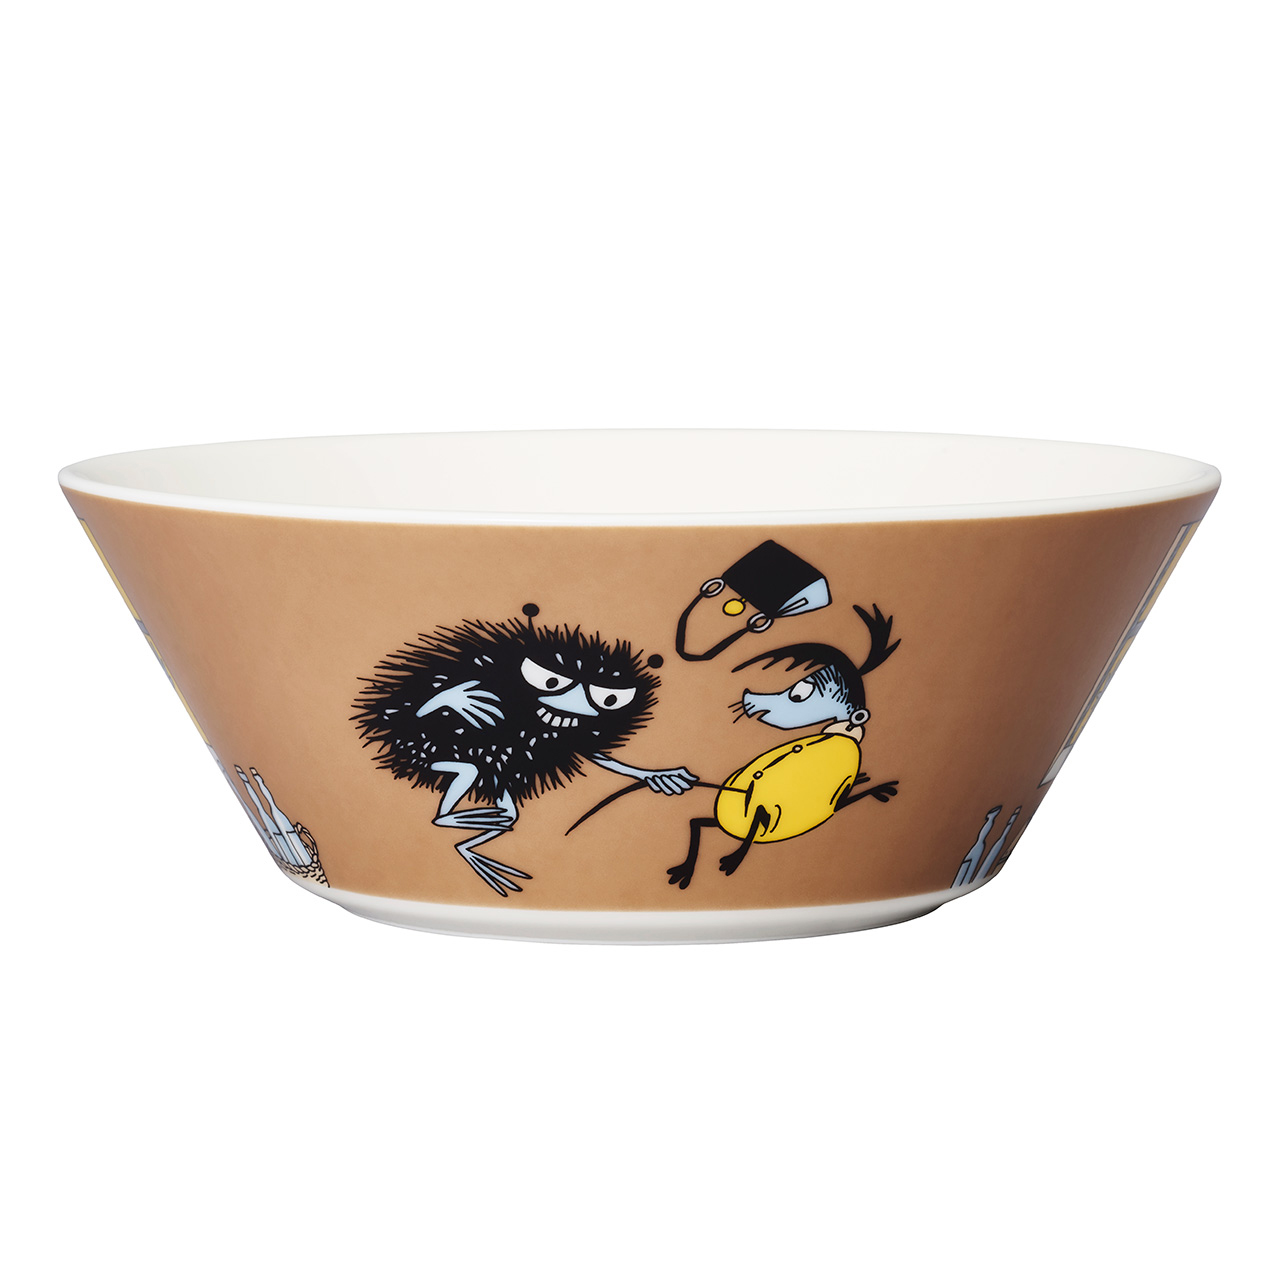 1062214_Moomin_moomin-bowl-15cm-stinky-in-action_01.jpg